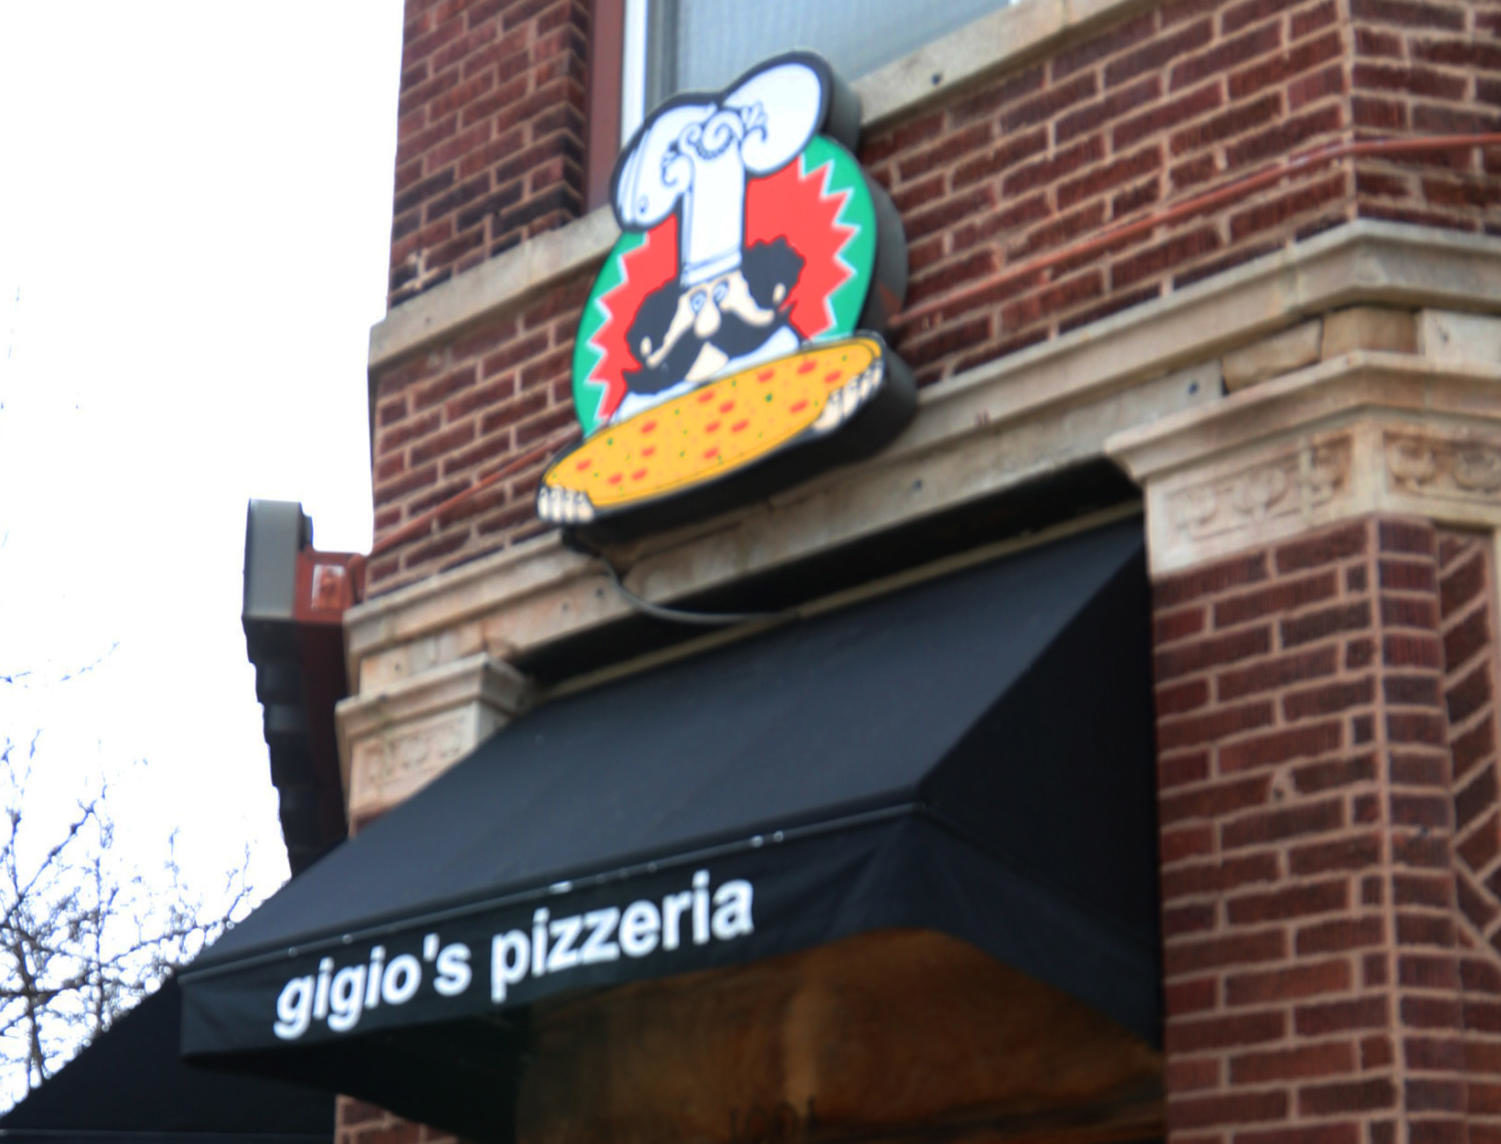 Winner: Gigio’s Pizzeria